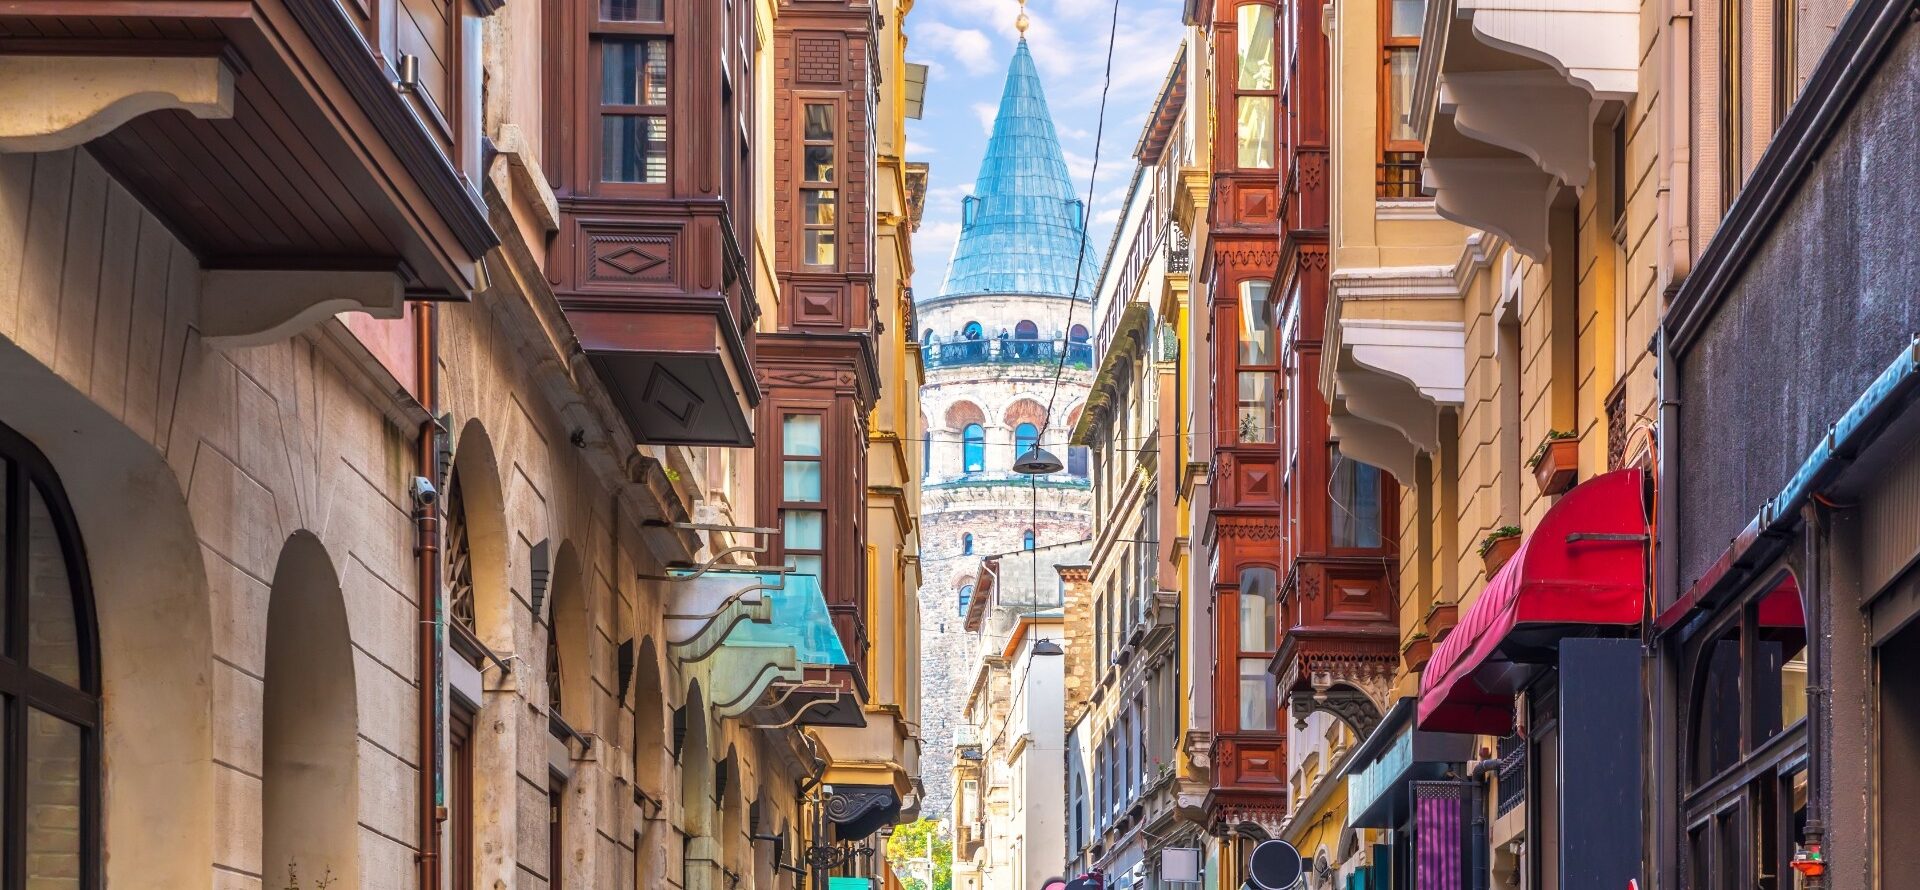 Nisantasi is the most prestigious neighborhood in Istanbul